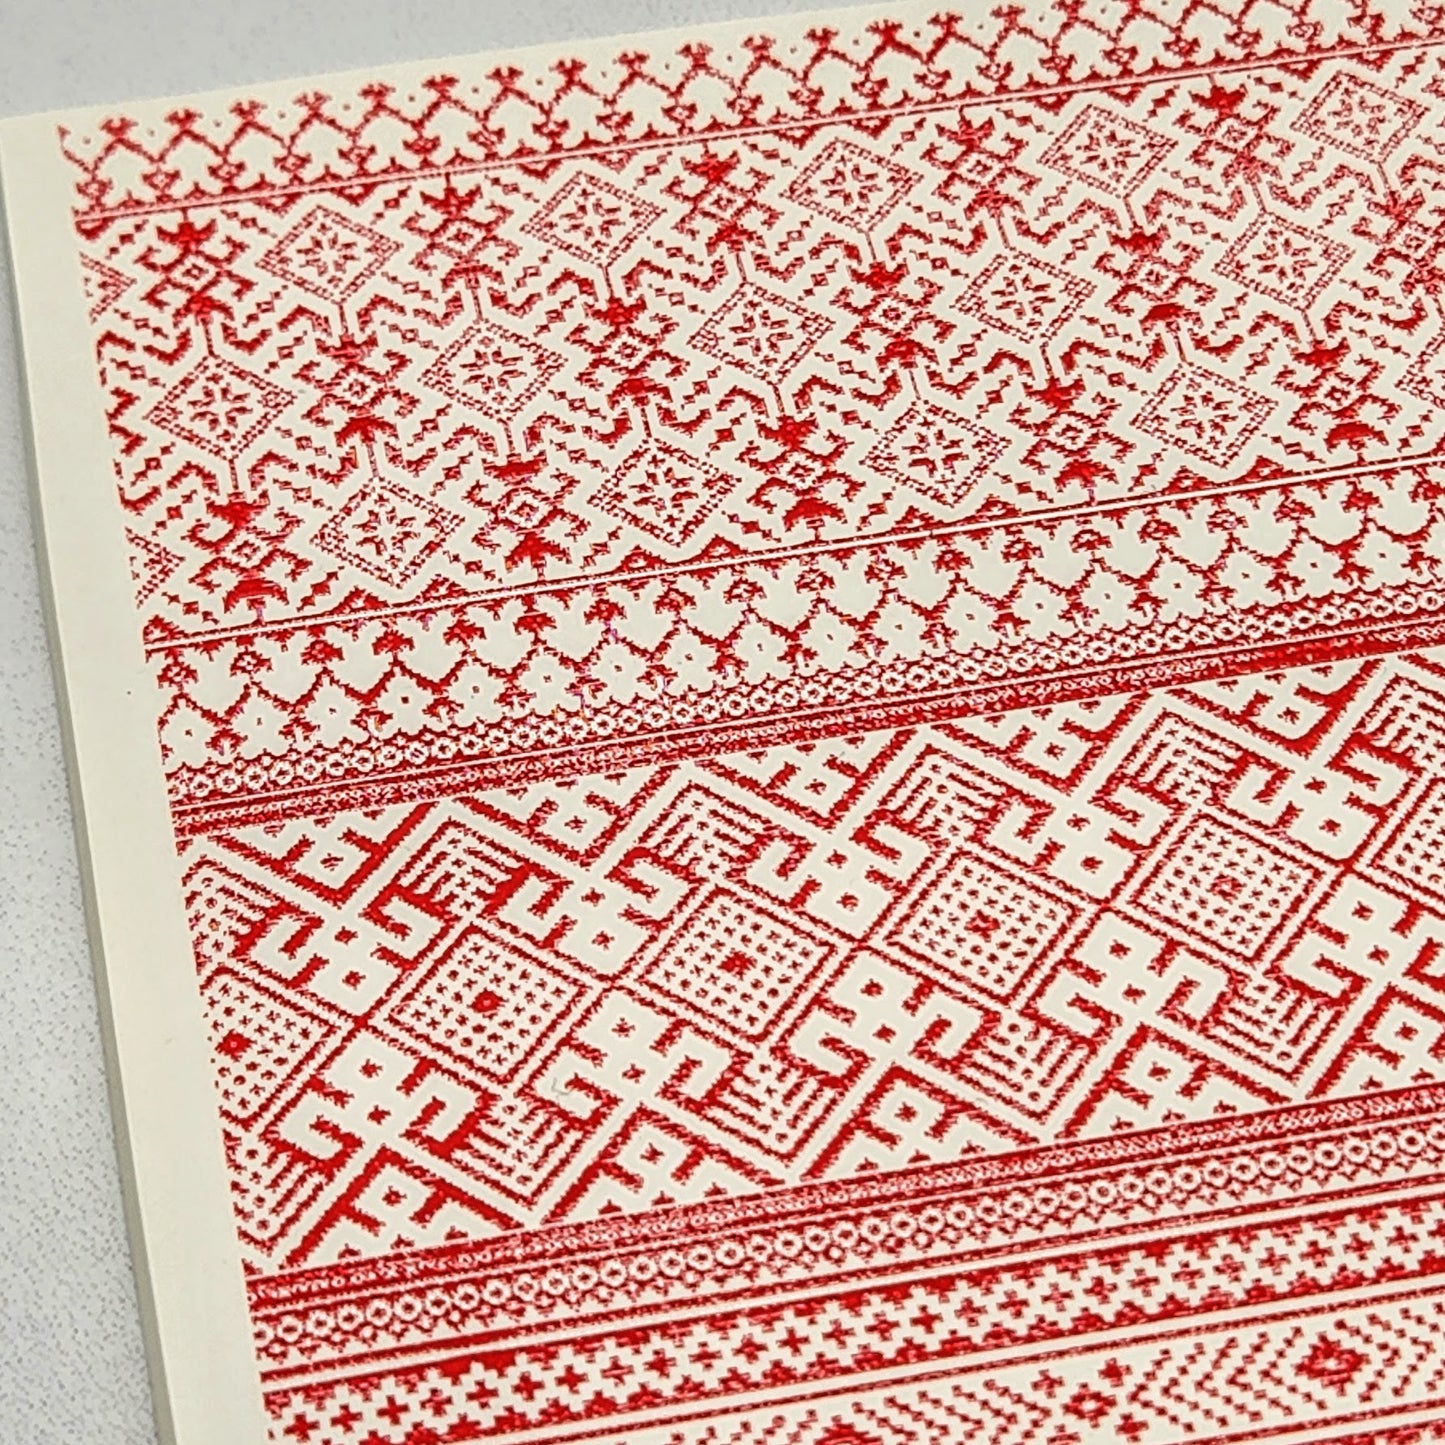 Ukrainian Embroidery Silk Screen